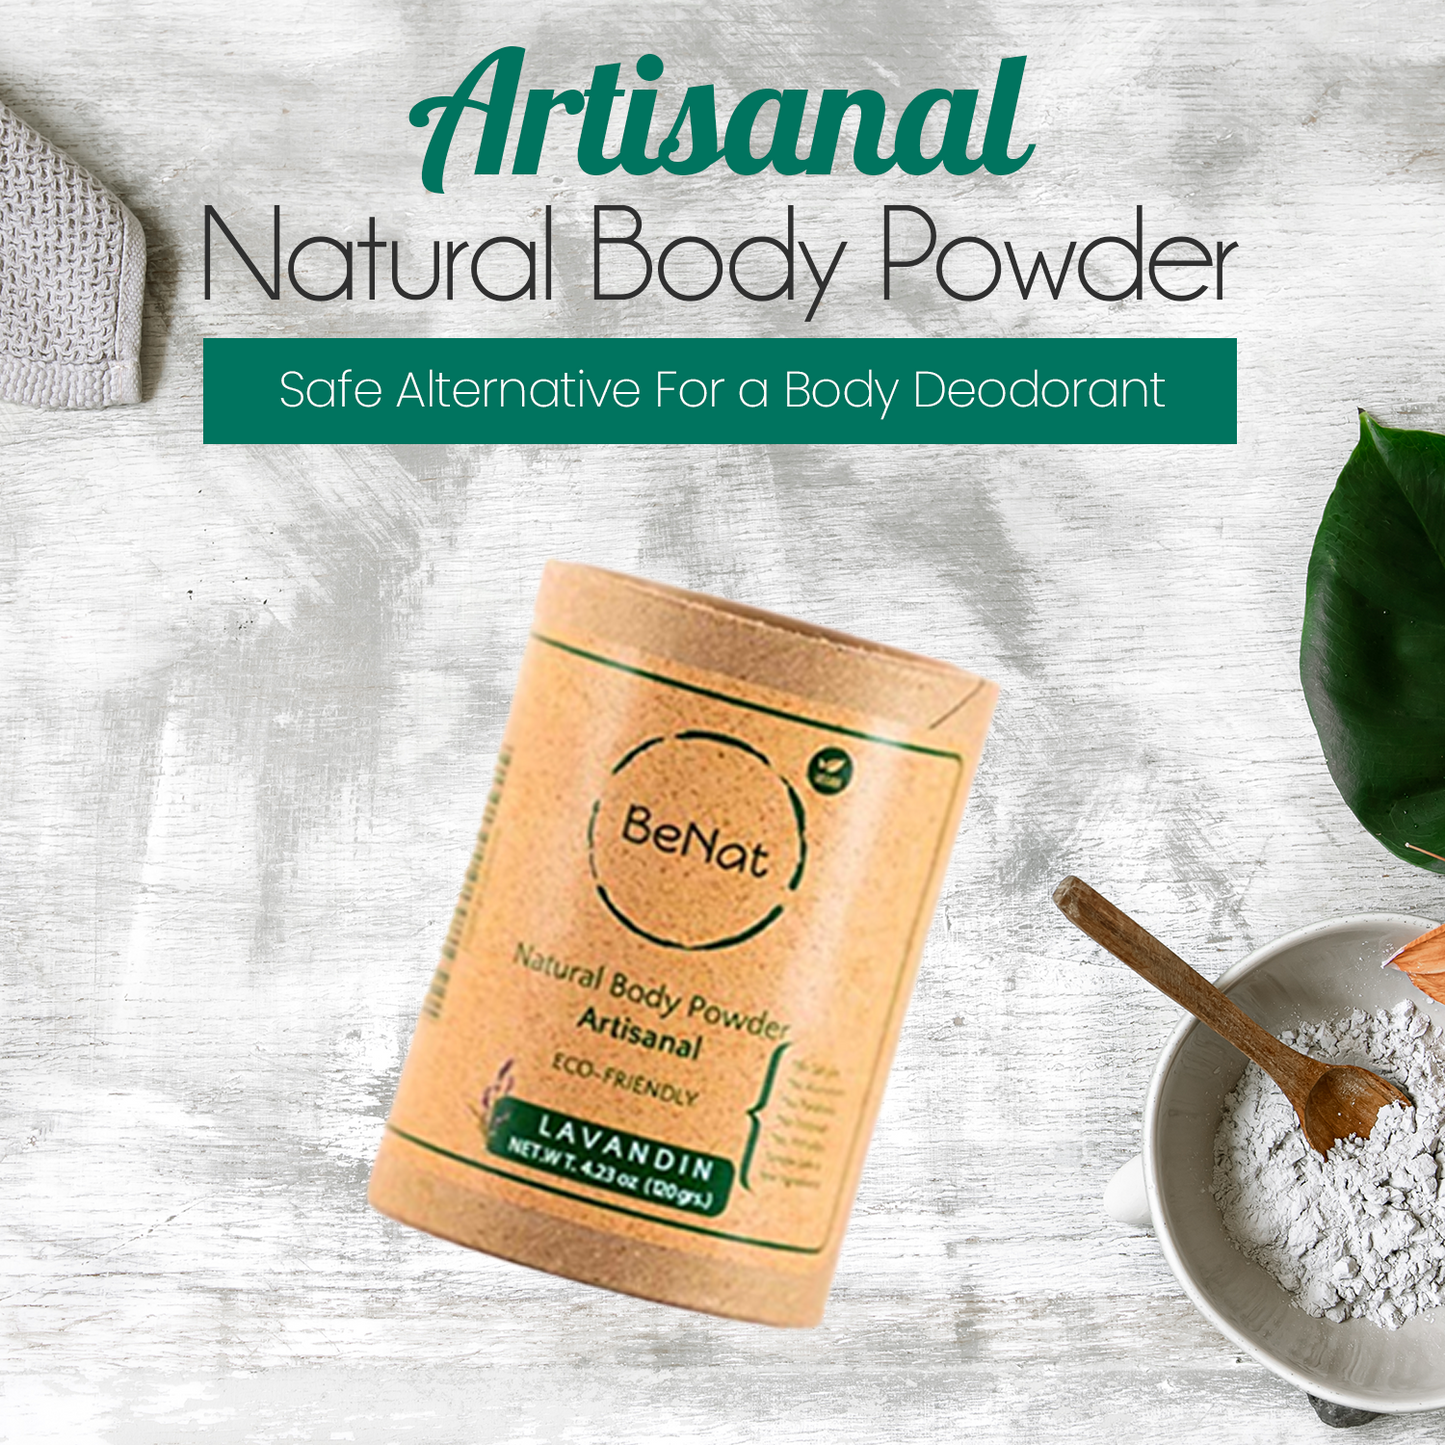 All-Natural Body Powder. Eco-Friendly.